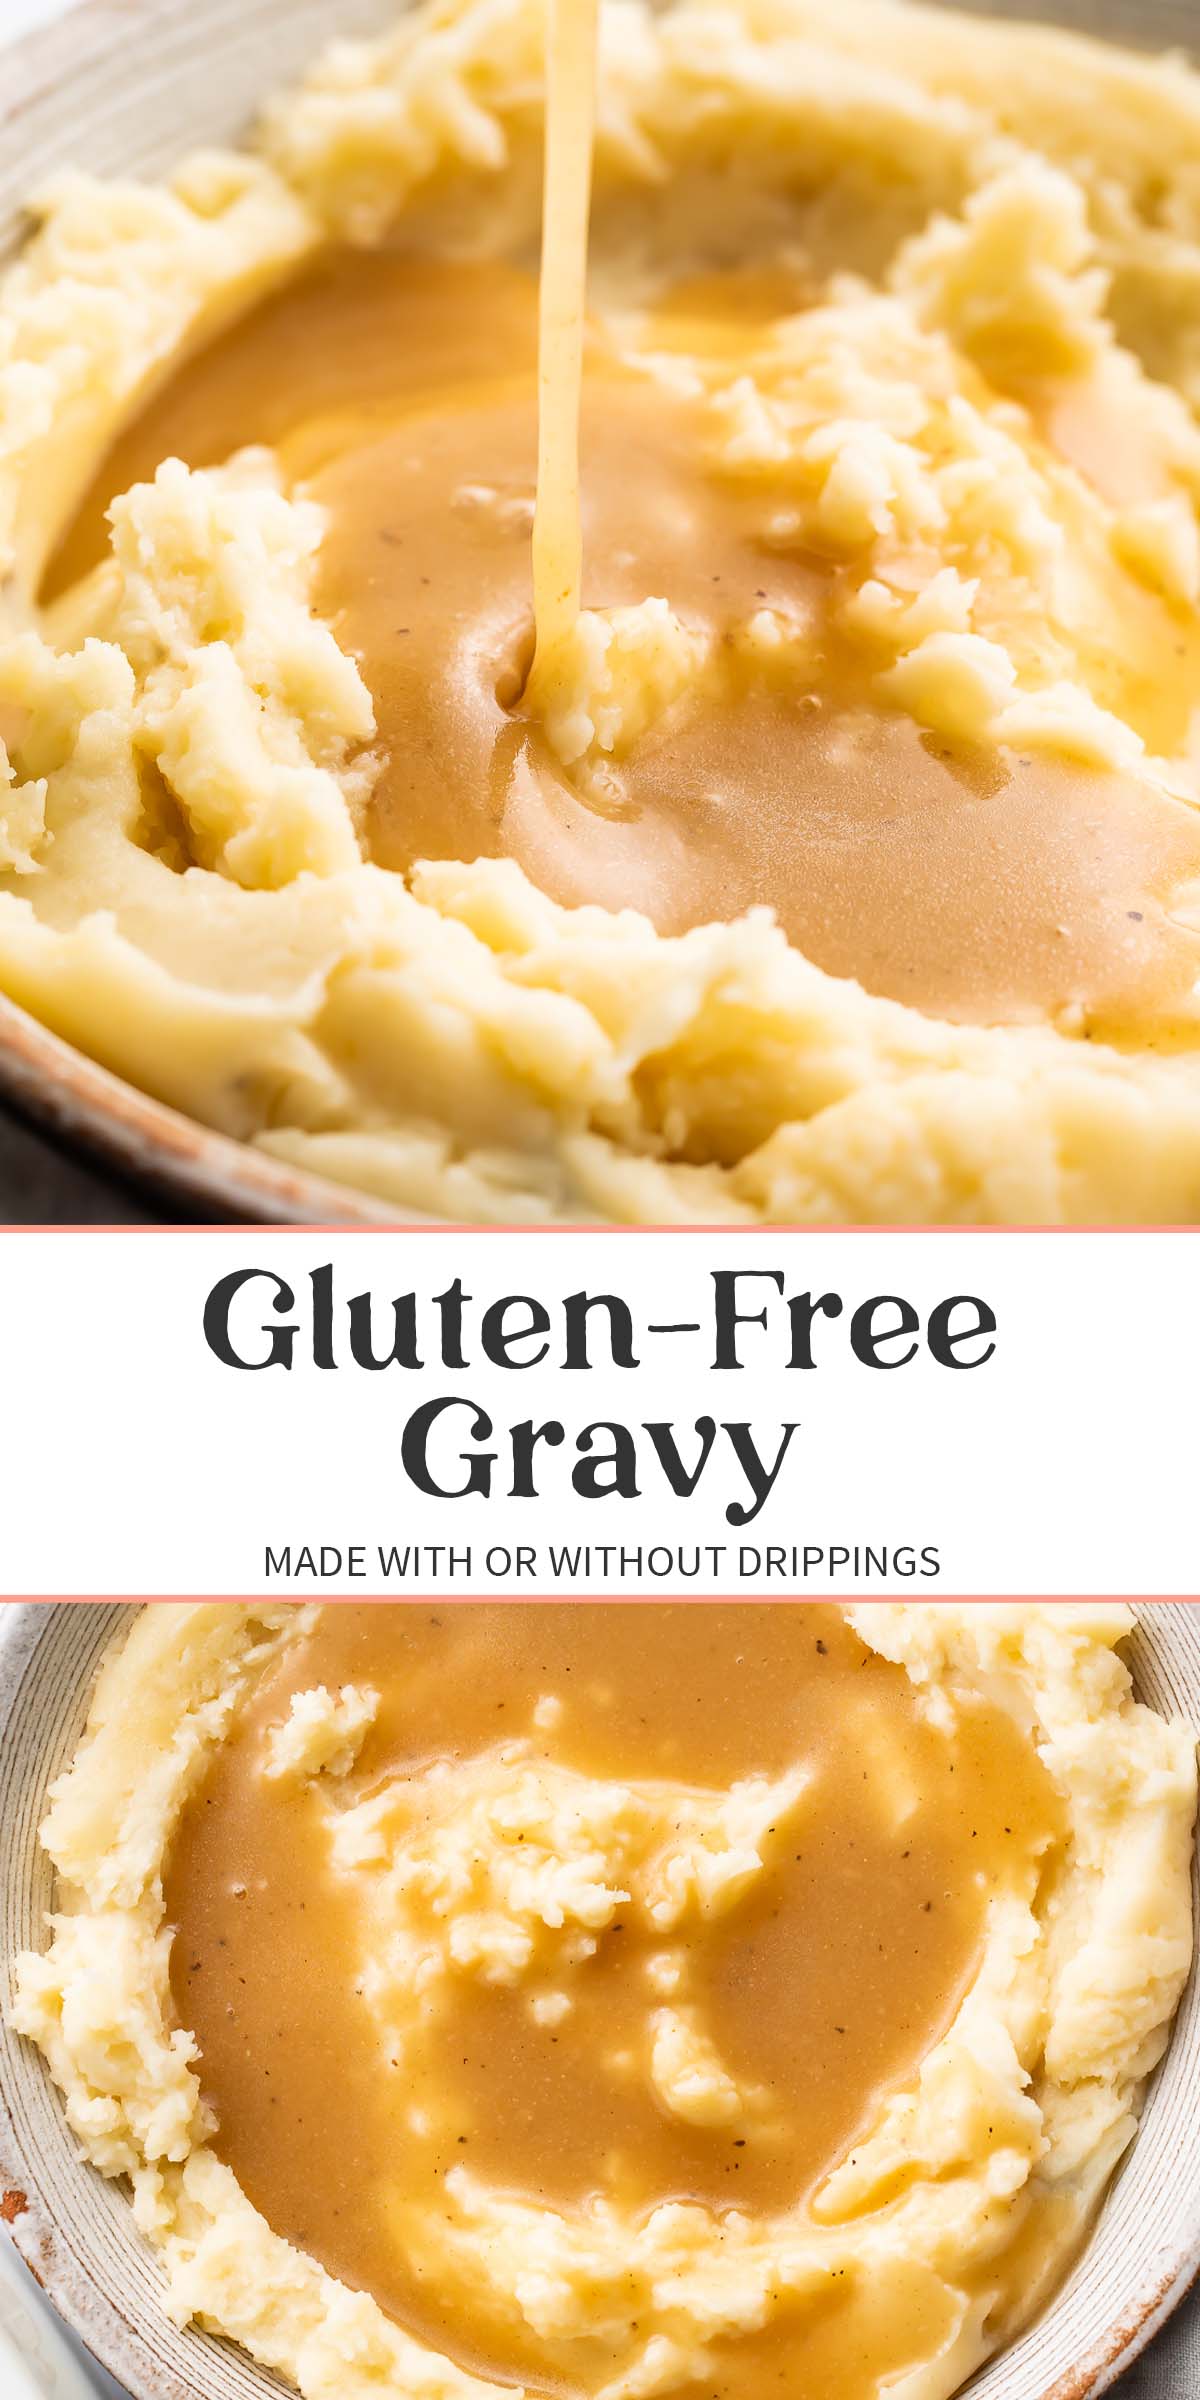 Pin graphic for gluten-free gravy.